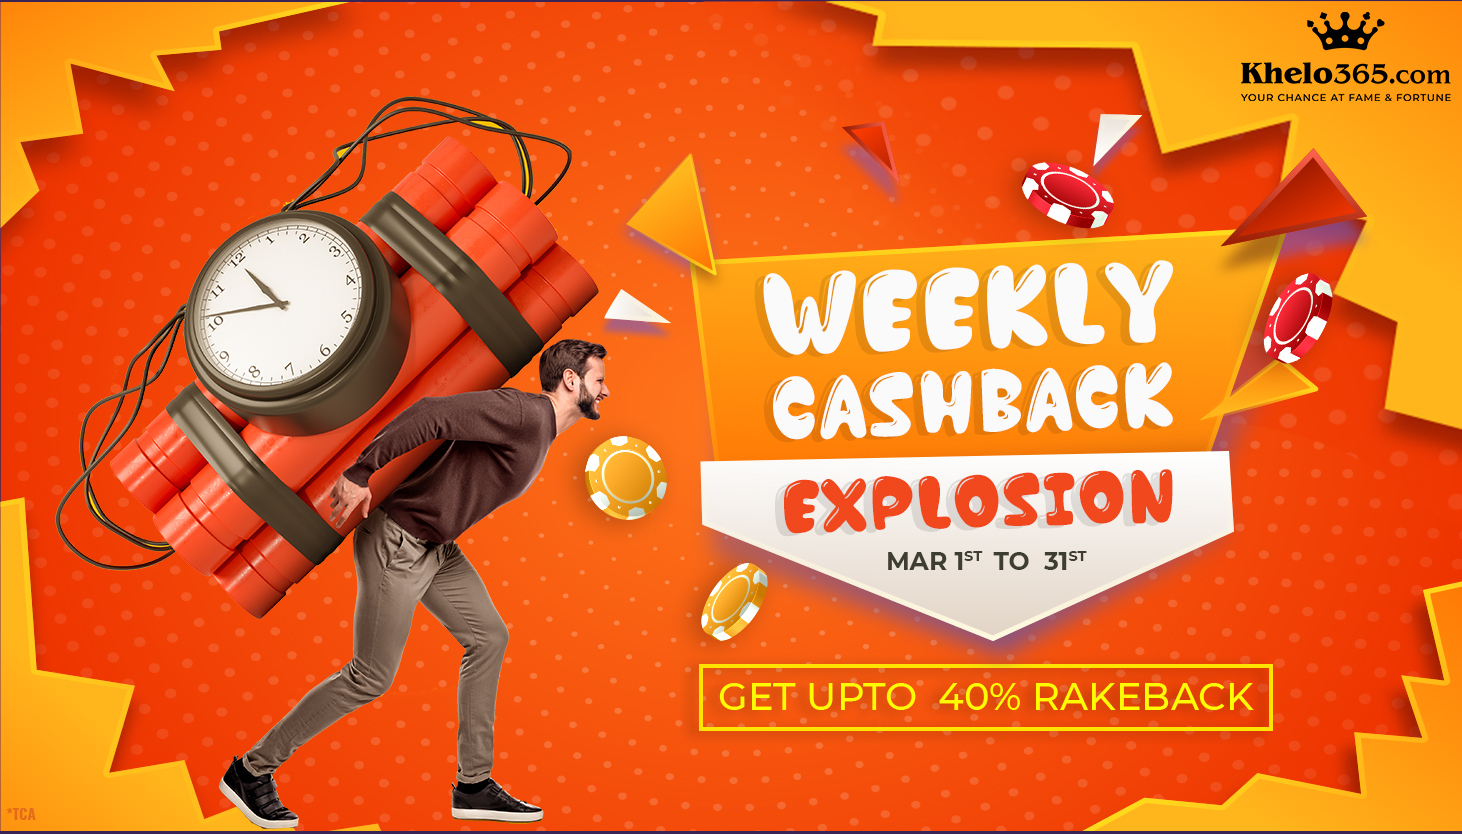 Weekly Cashback explosion